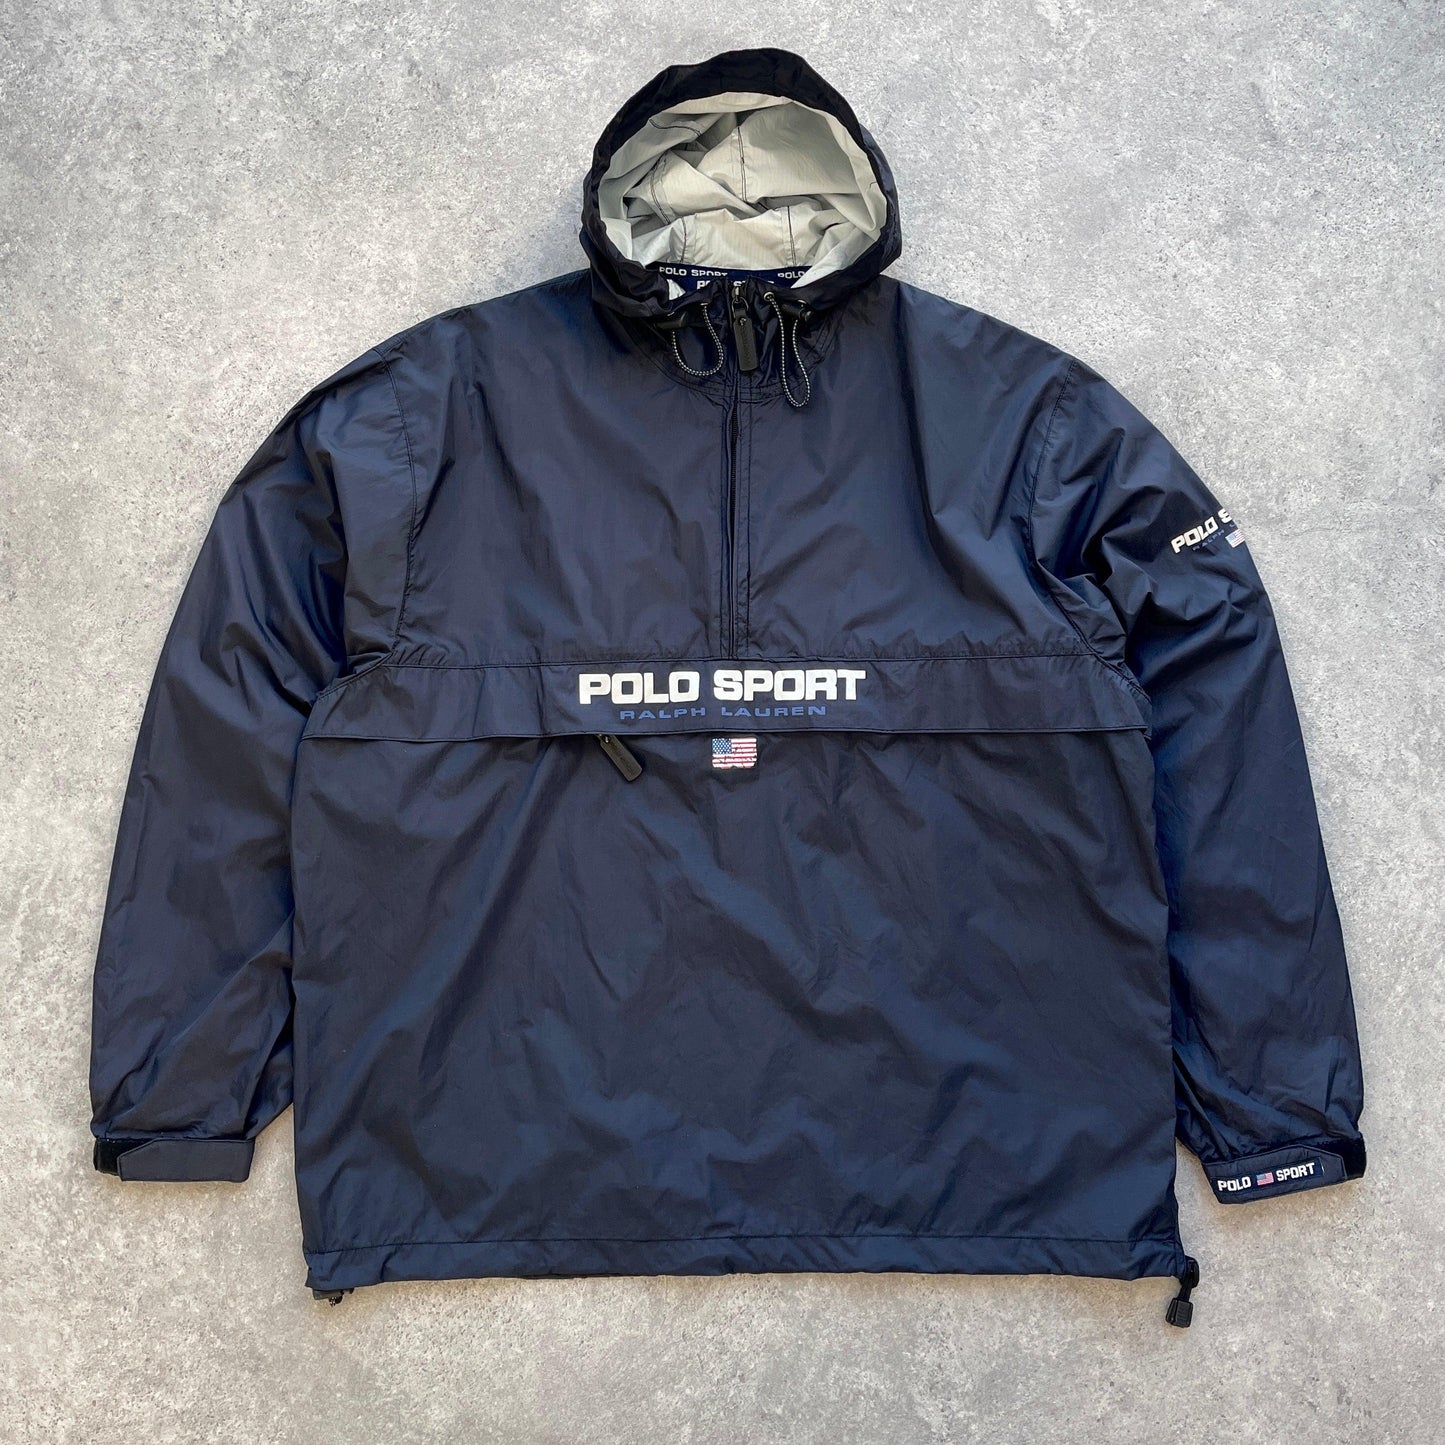 Polo Sport Ralph Lauren 1990s lightweight technical shell jacket (M) - Known Source